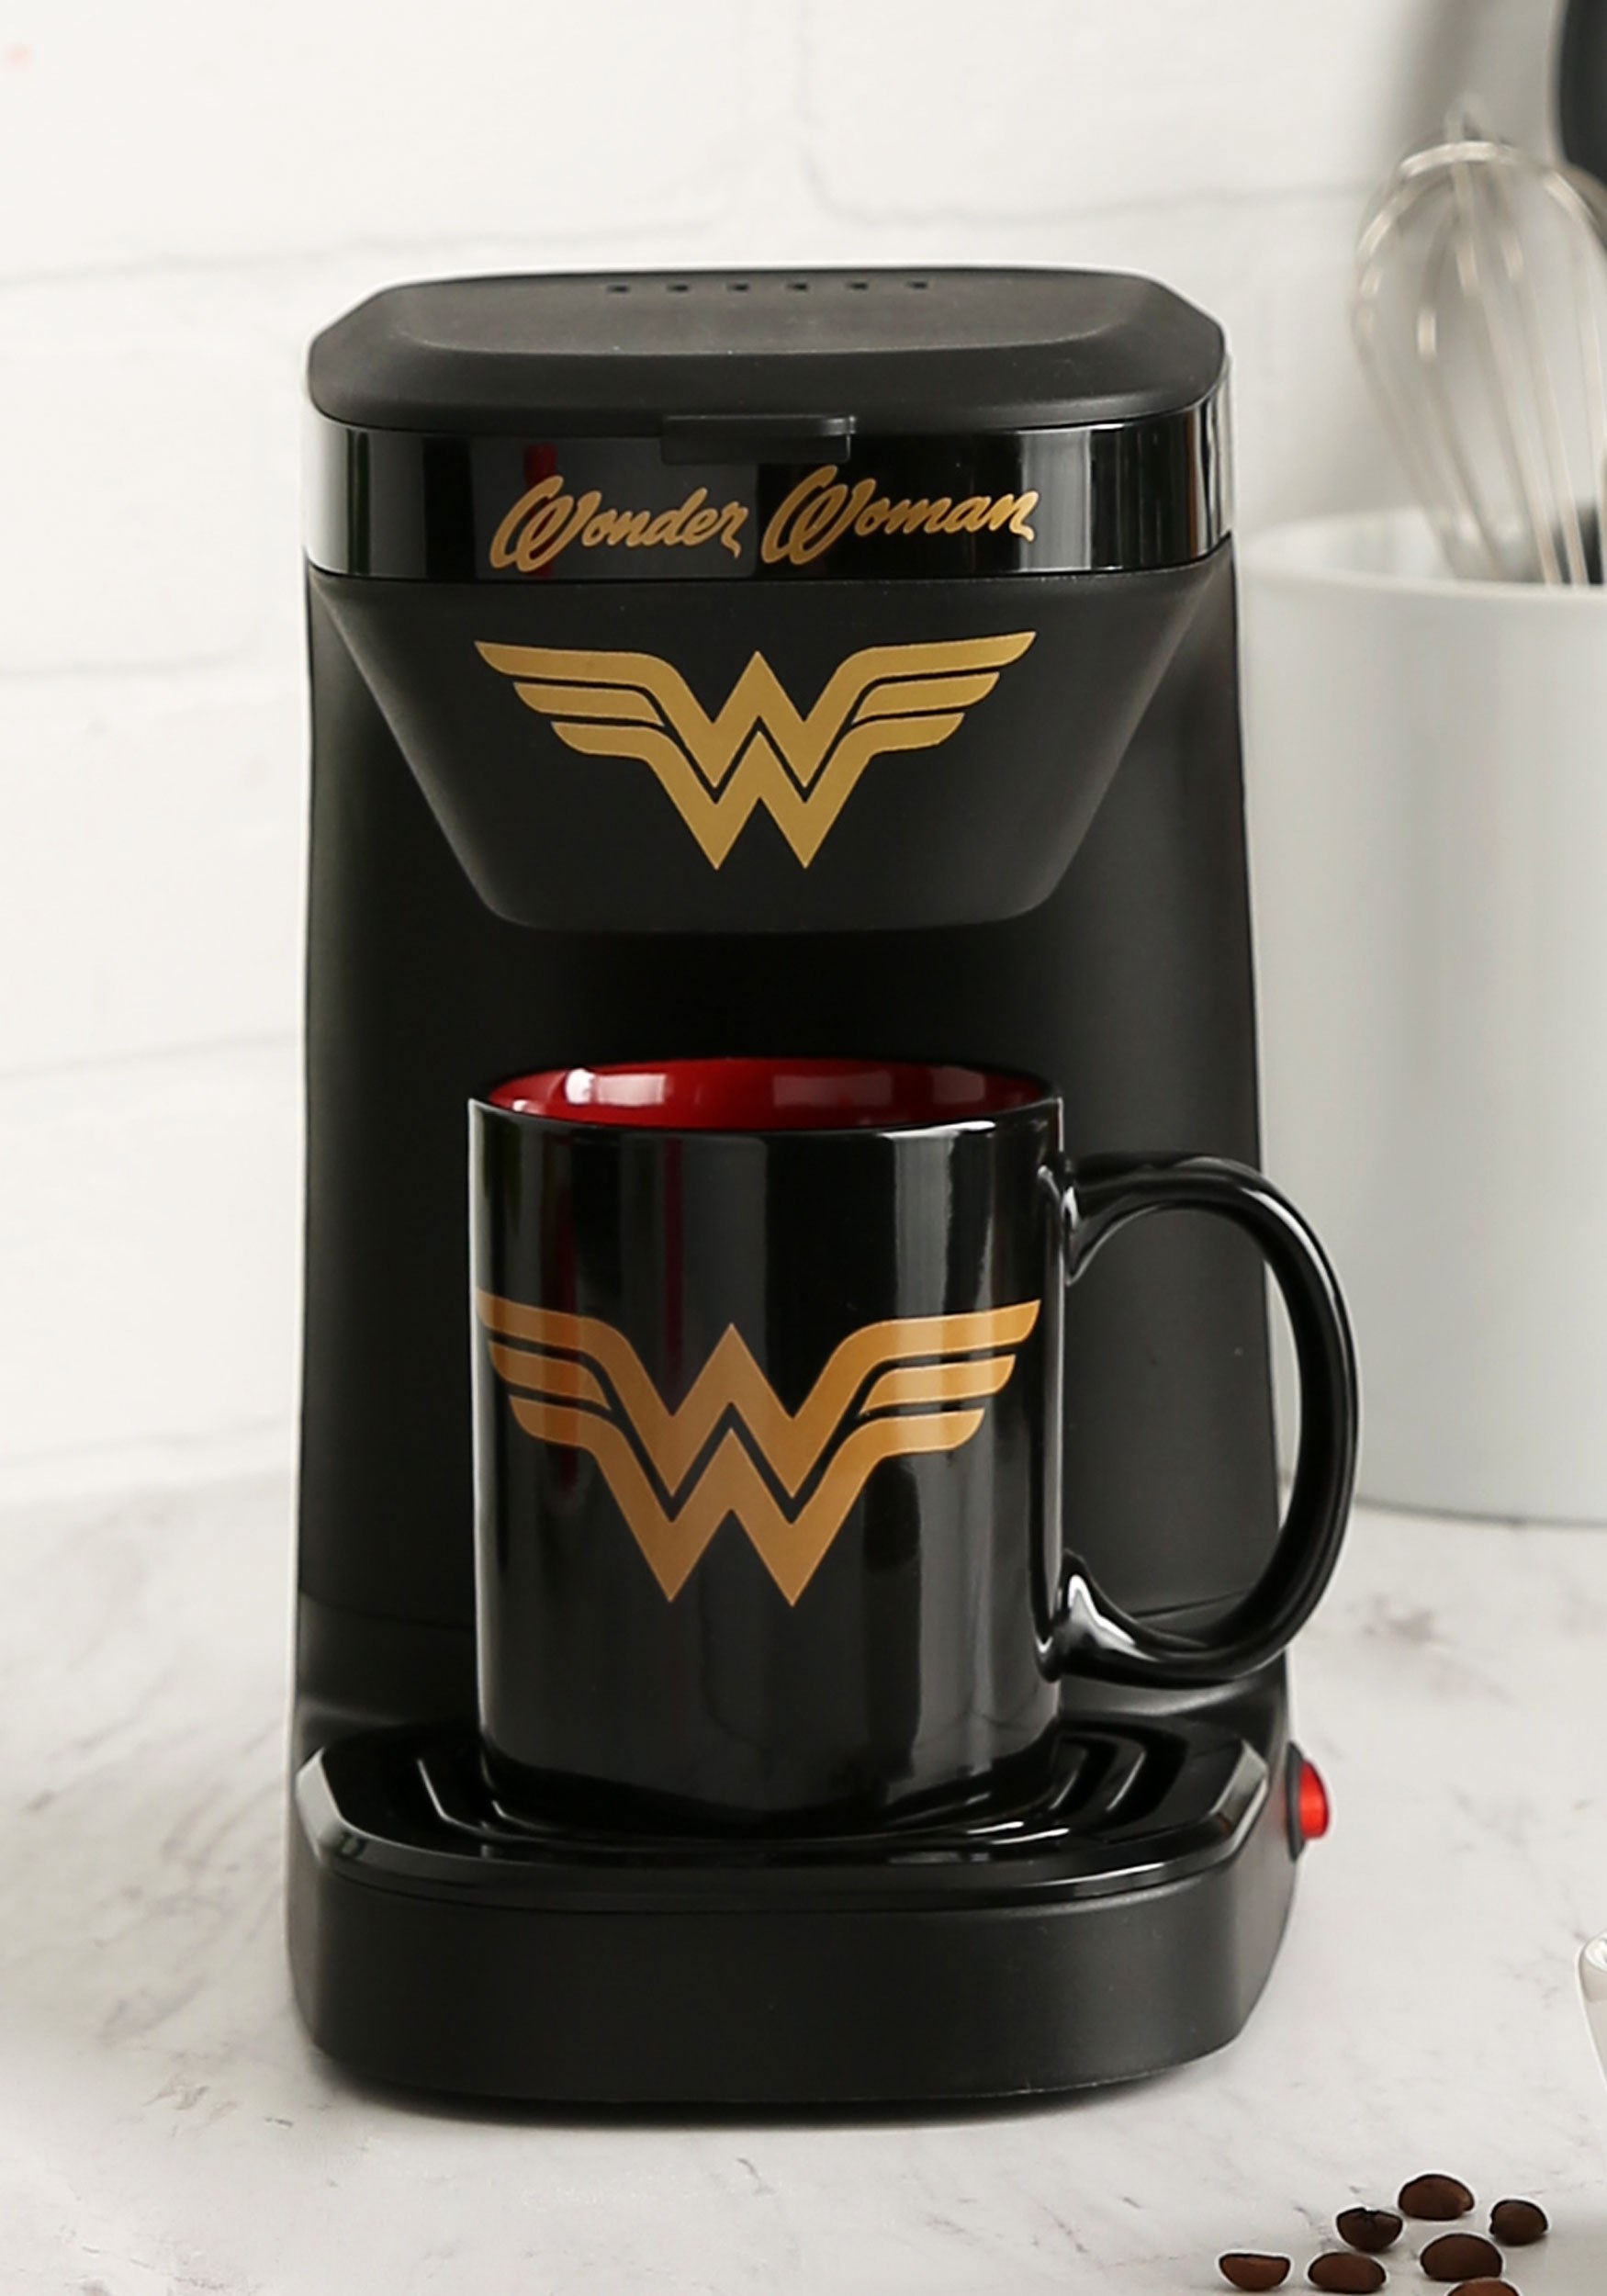 Single Brew Wonder Woman Coffee Maker